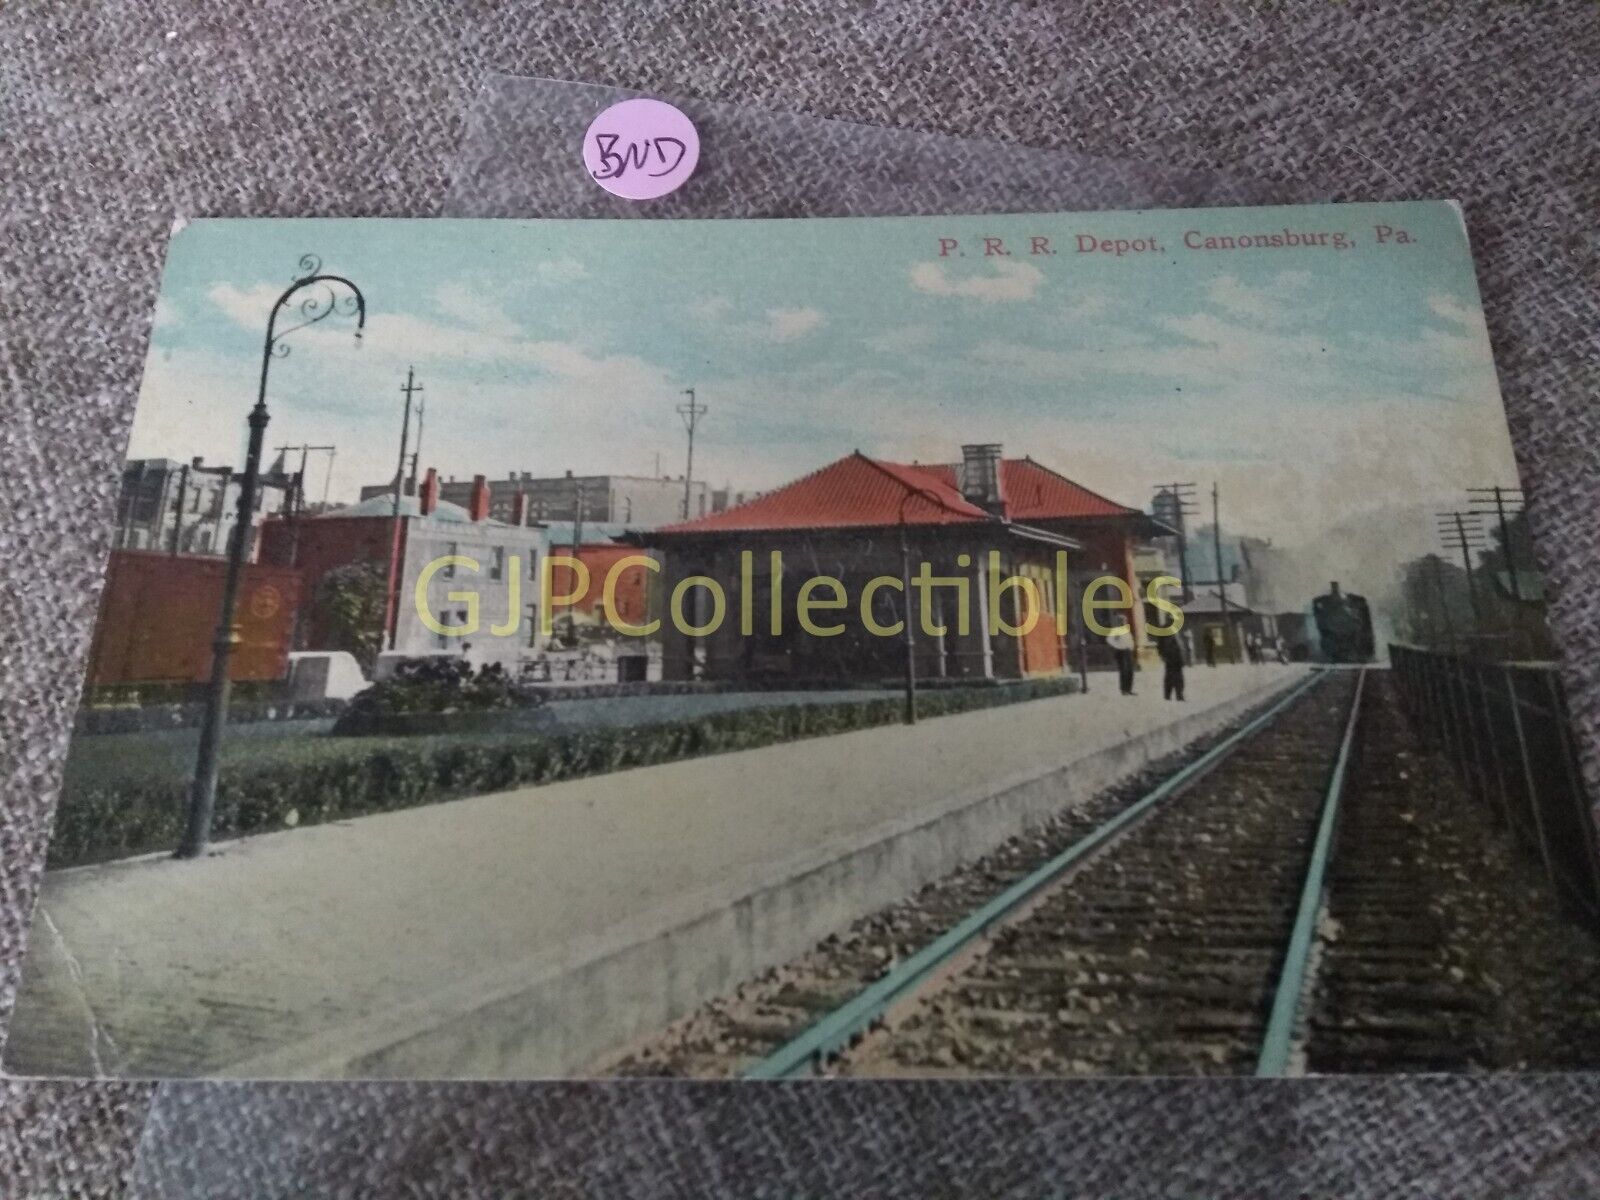 PBND Train or Station Postcard Railroad  RR P RR DEPOT CANONSBURG PA